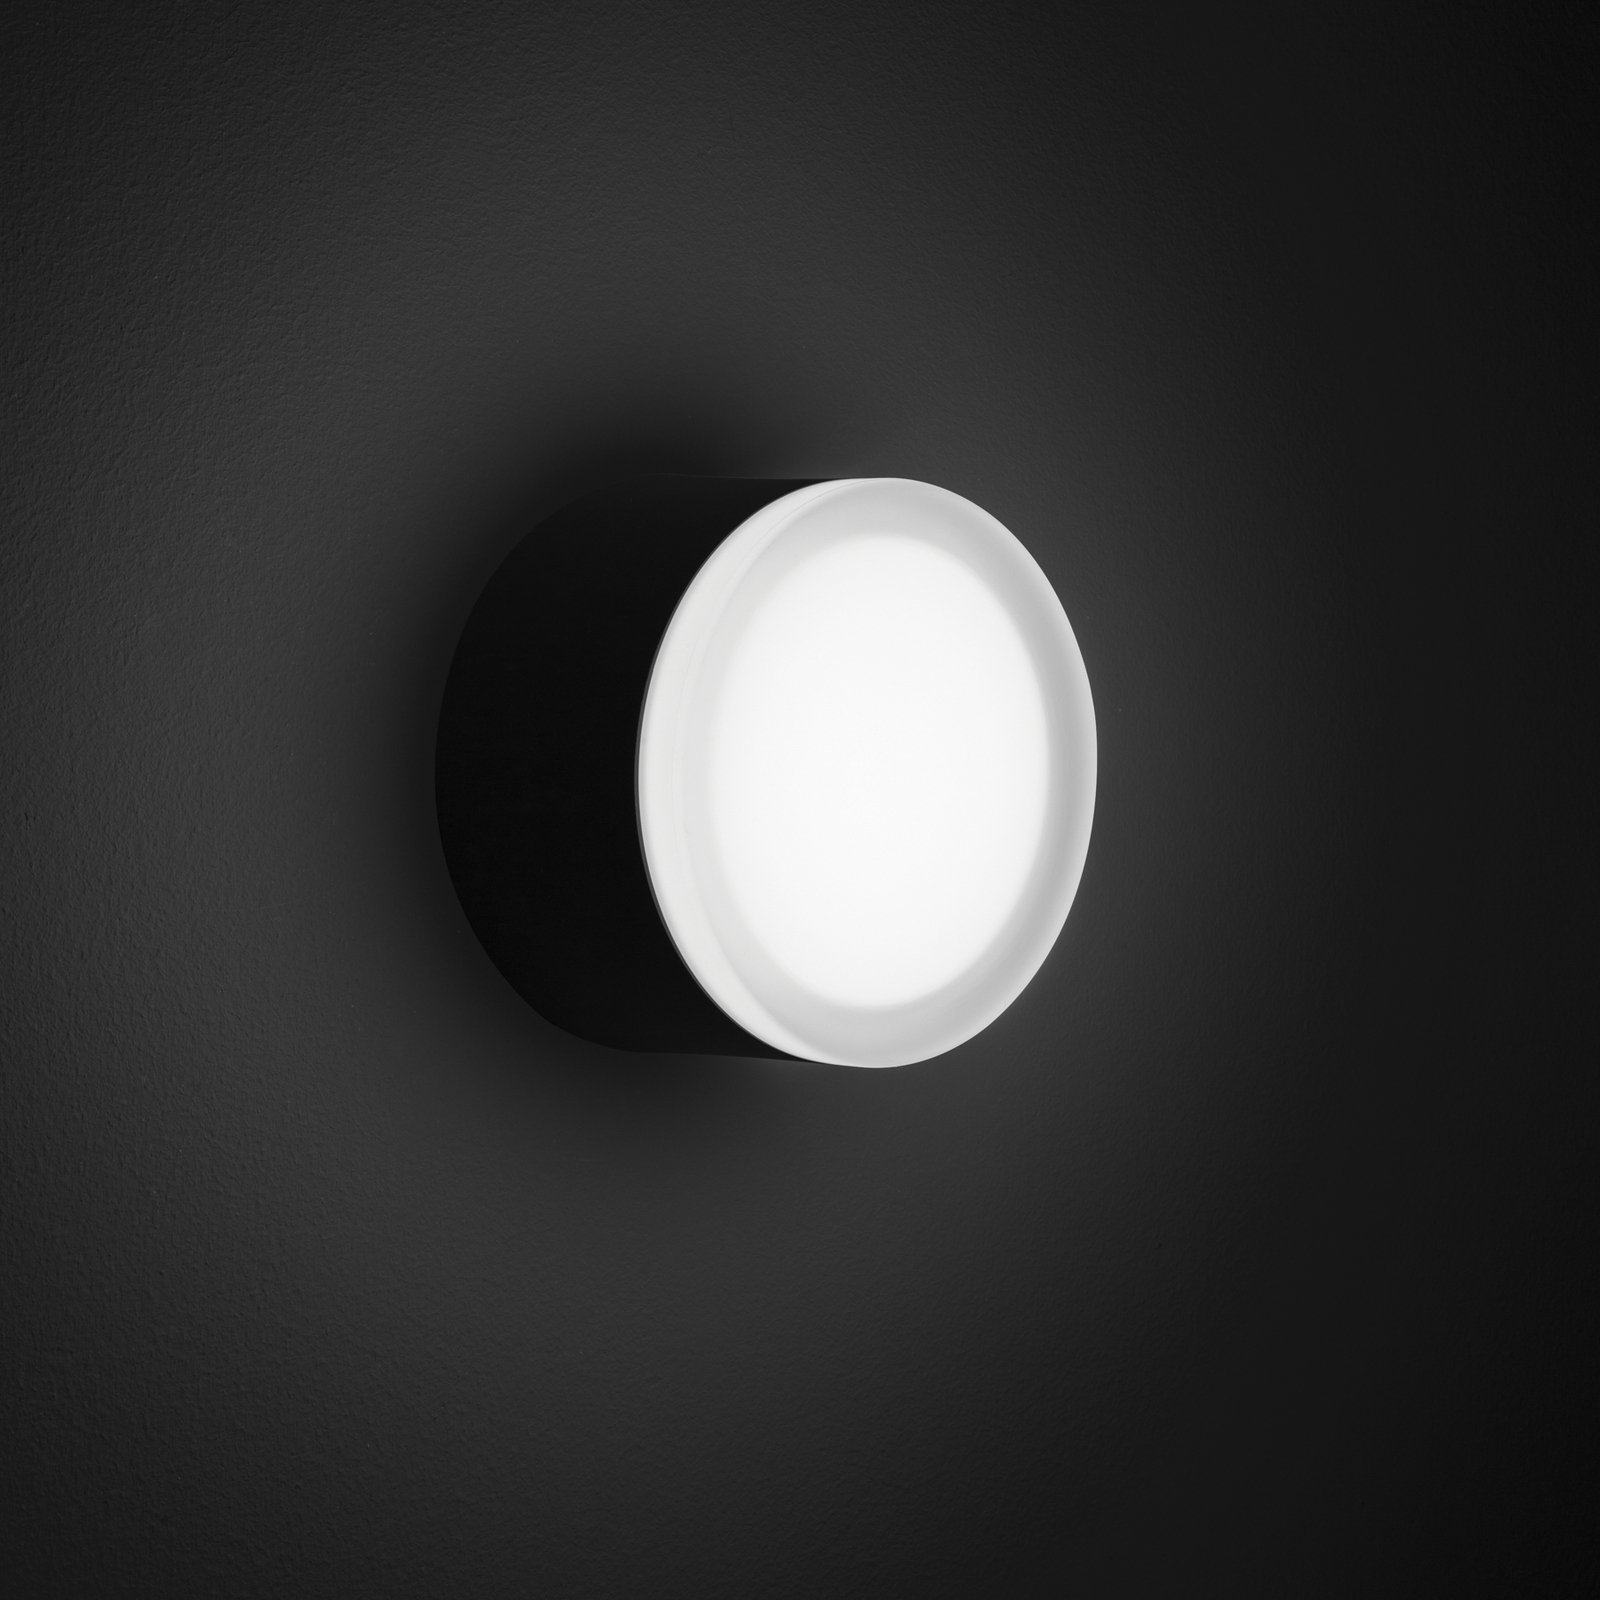 LED plafondlamp 1420 voor buiten plafond, grafiet Ø 13 cm